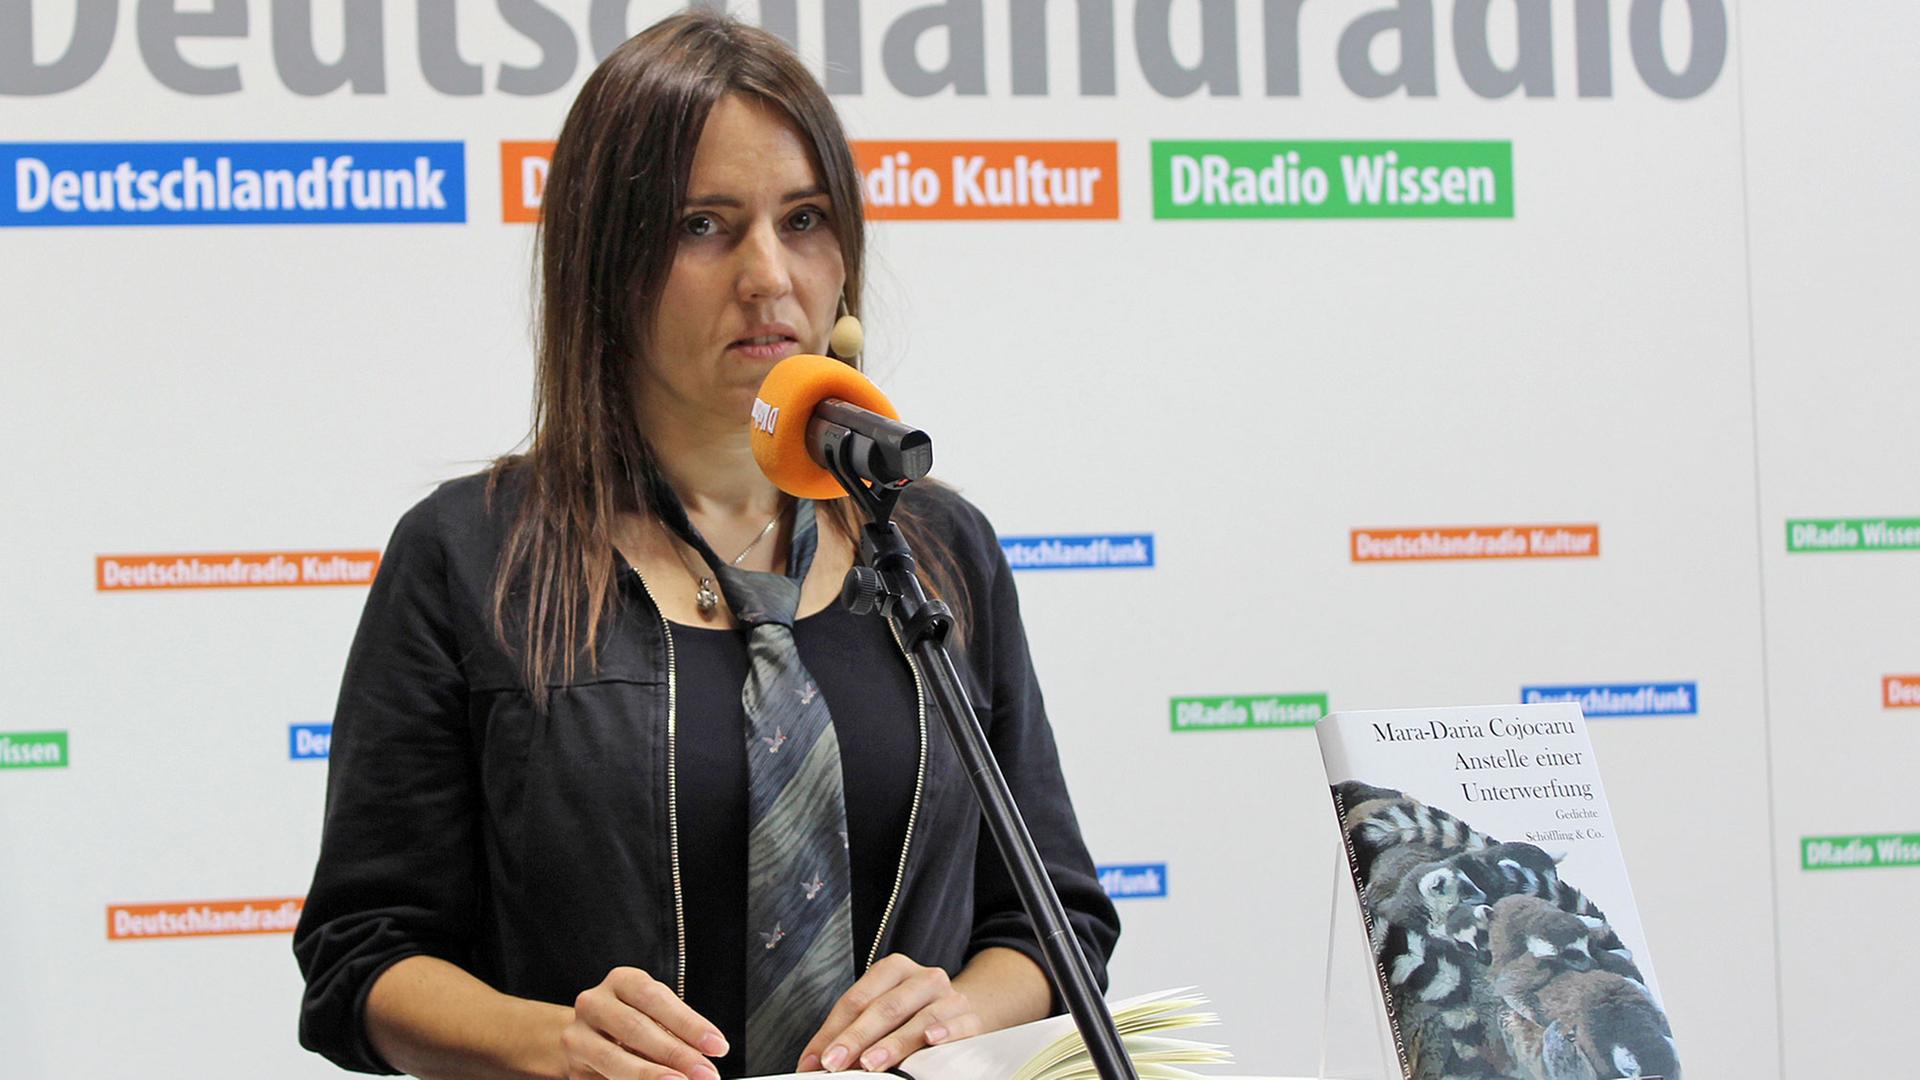 Mara-Daria Cojocaru auf der Frankfurter Buchmesse 2016